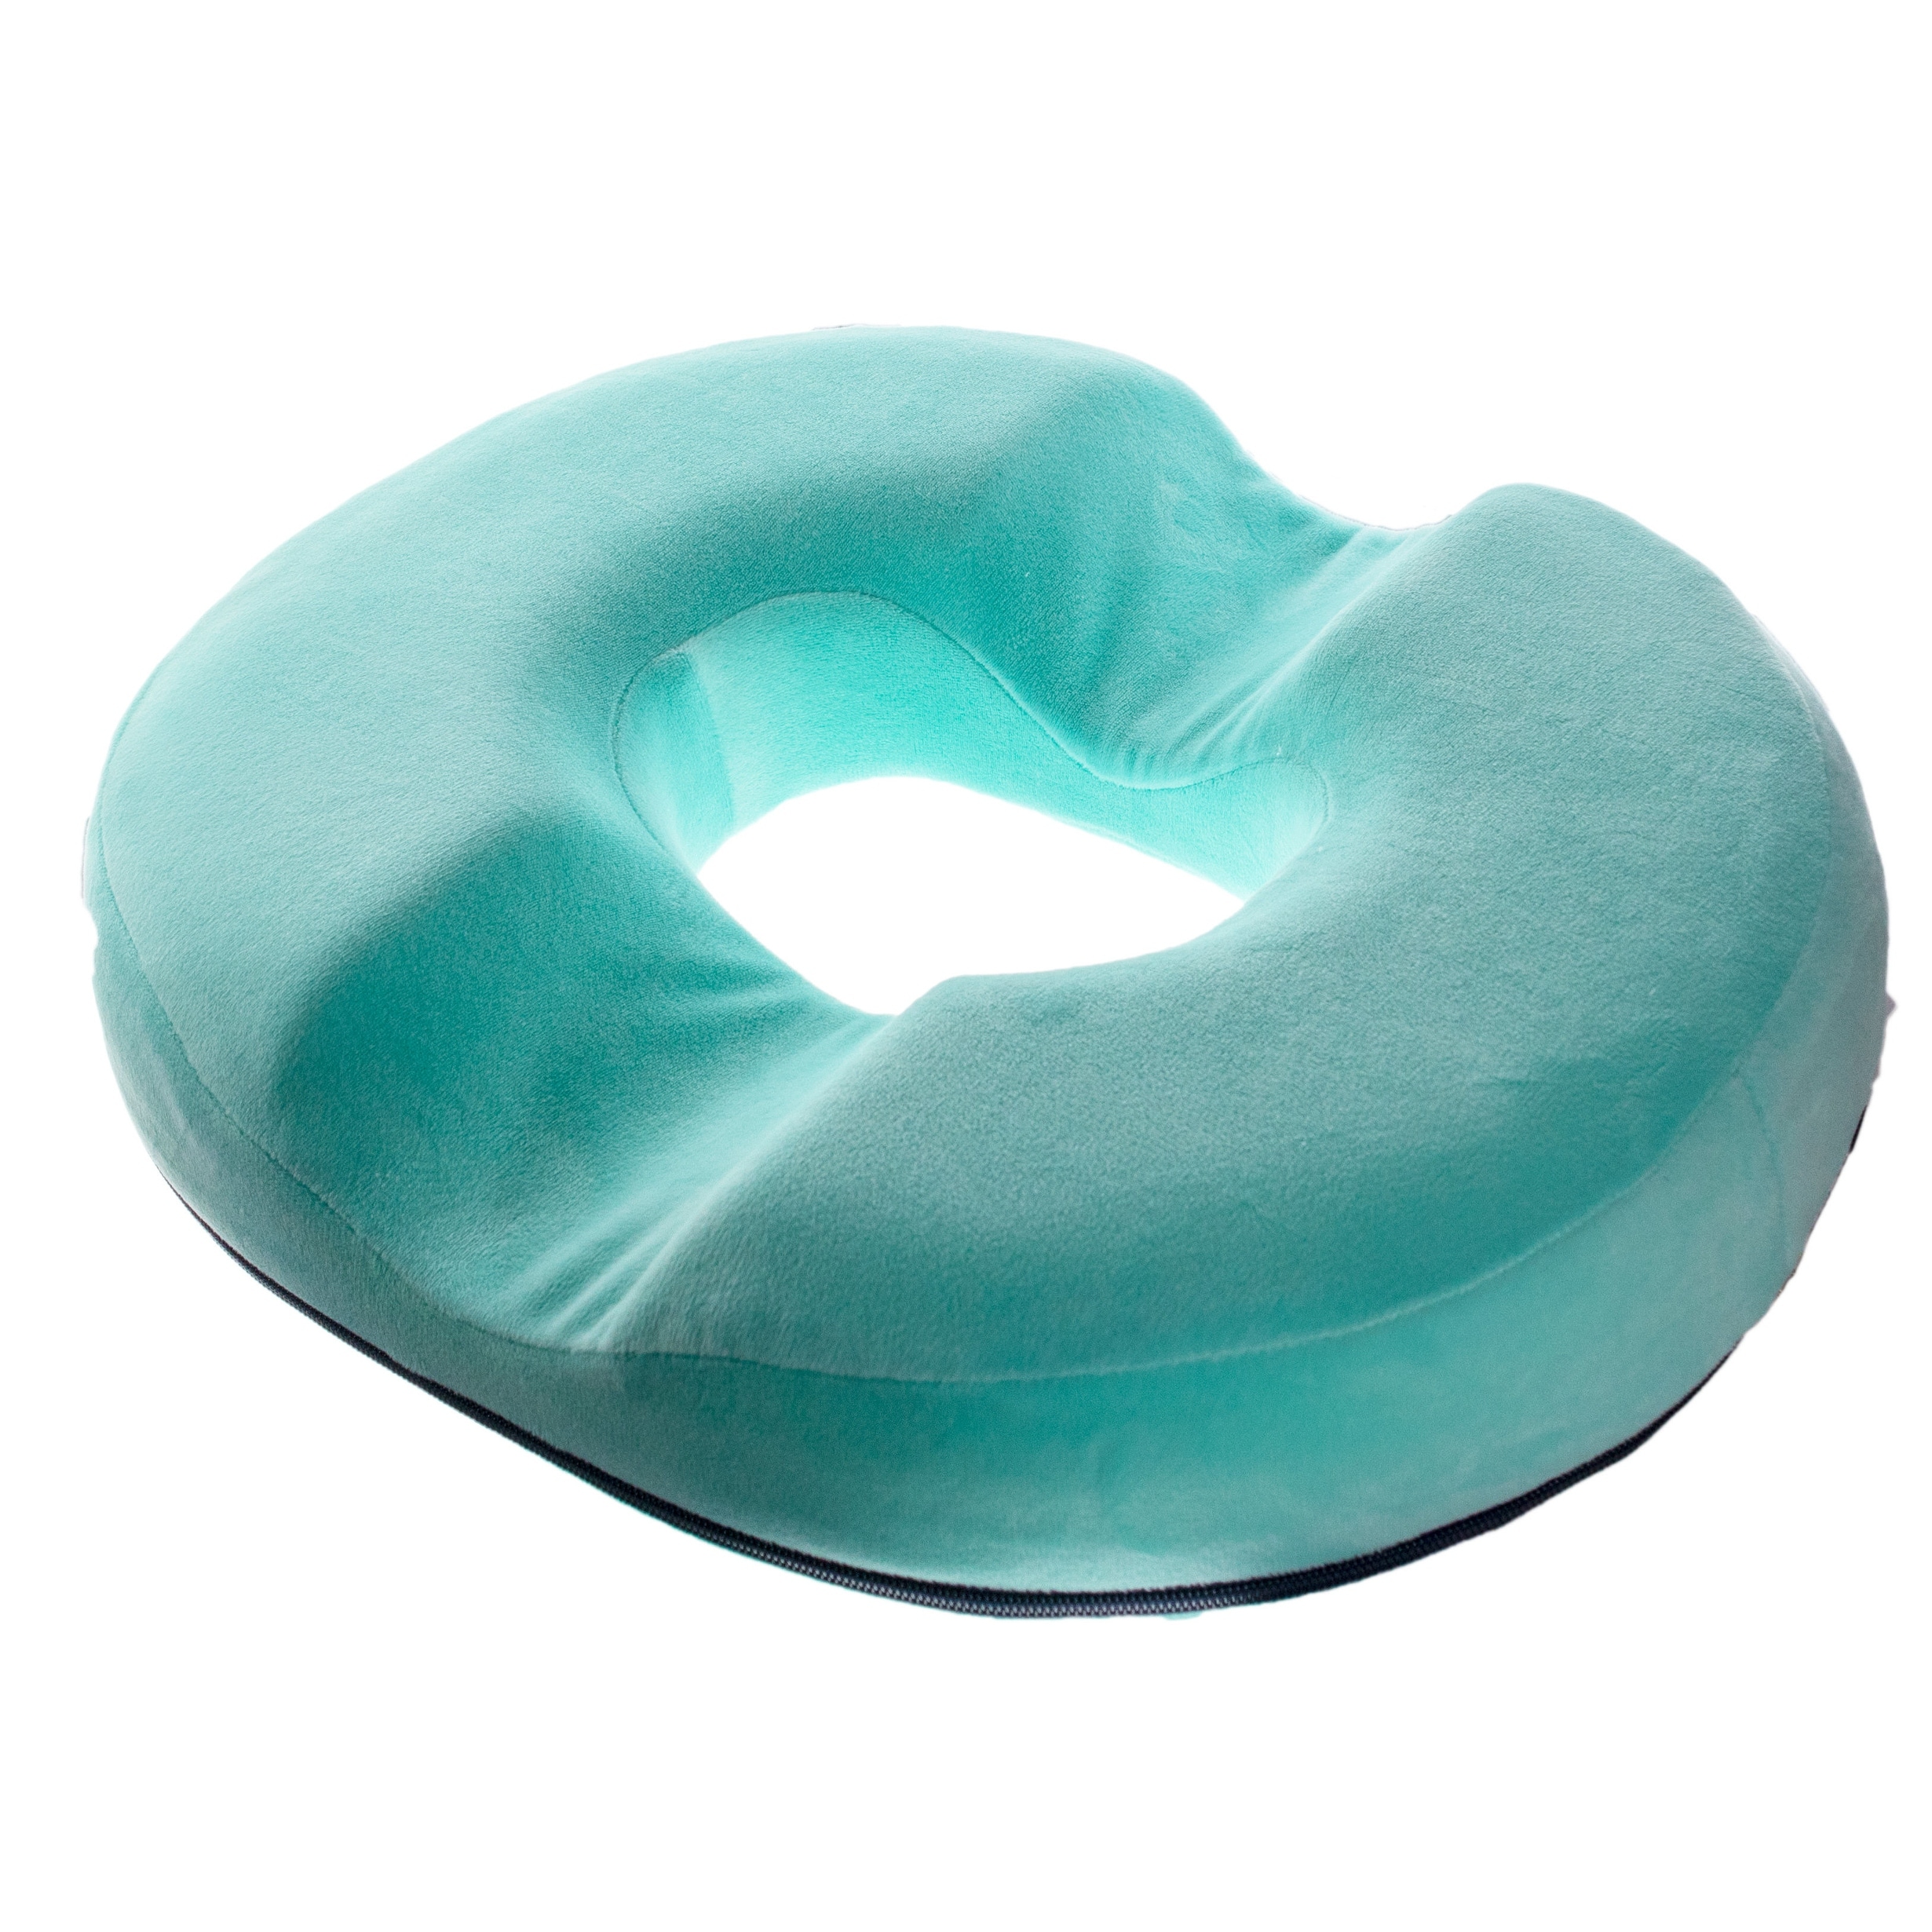 Donut Pillow - Orthopedic Bamboo Memory Foam Donut Seat Cushion